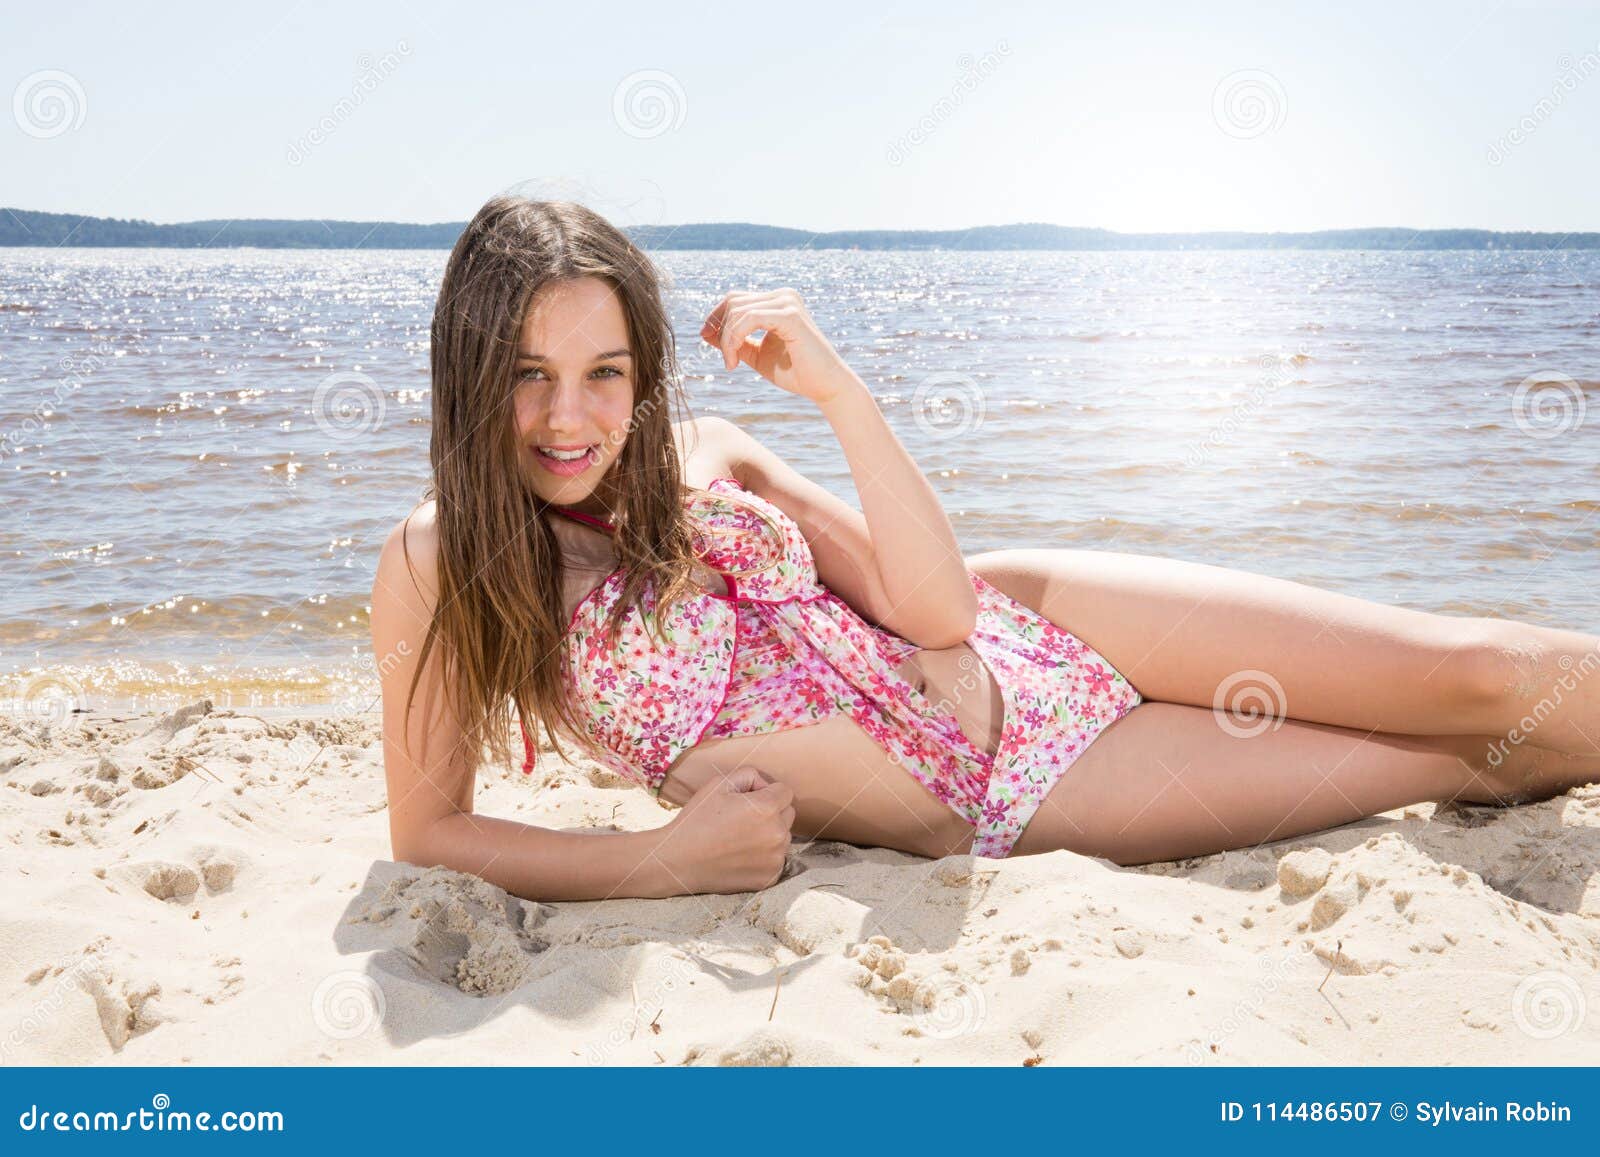 1,779 Teenager Bikini Model Stock Photos - Free & Royalty-Free